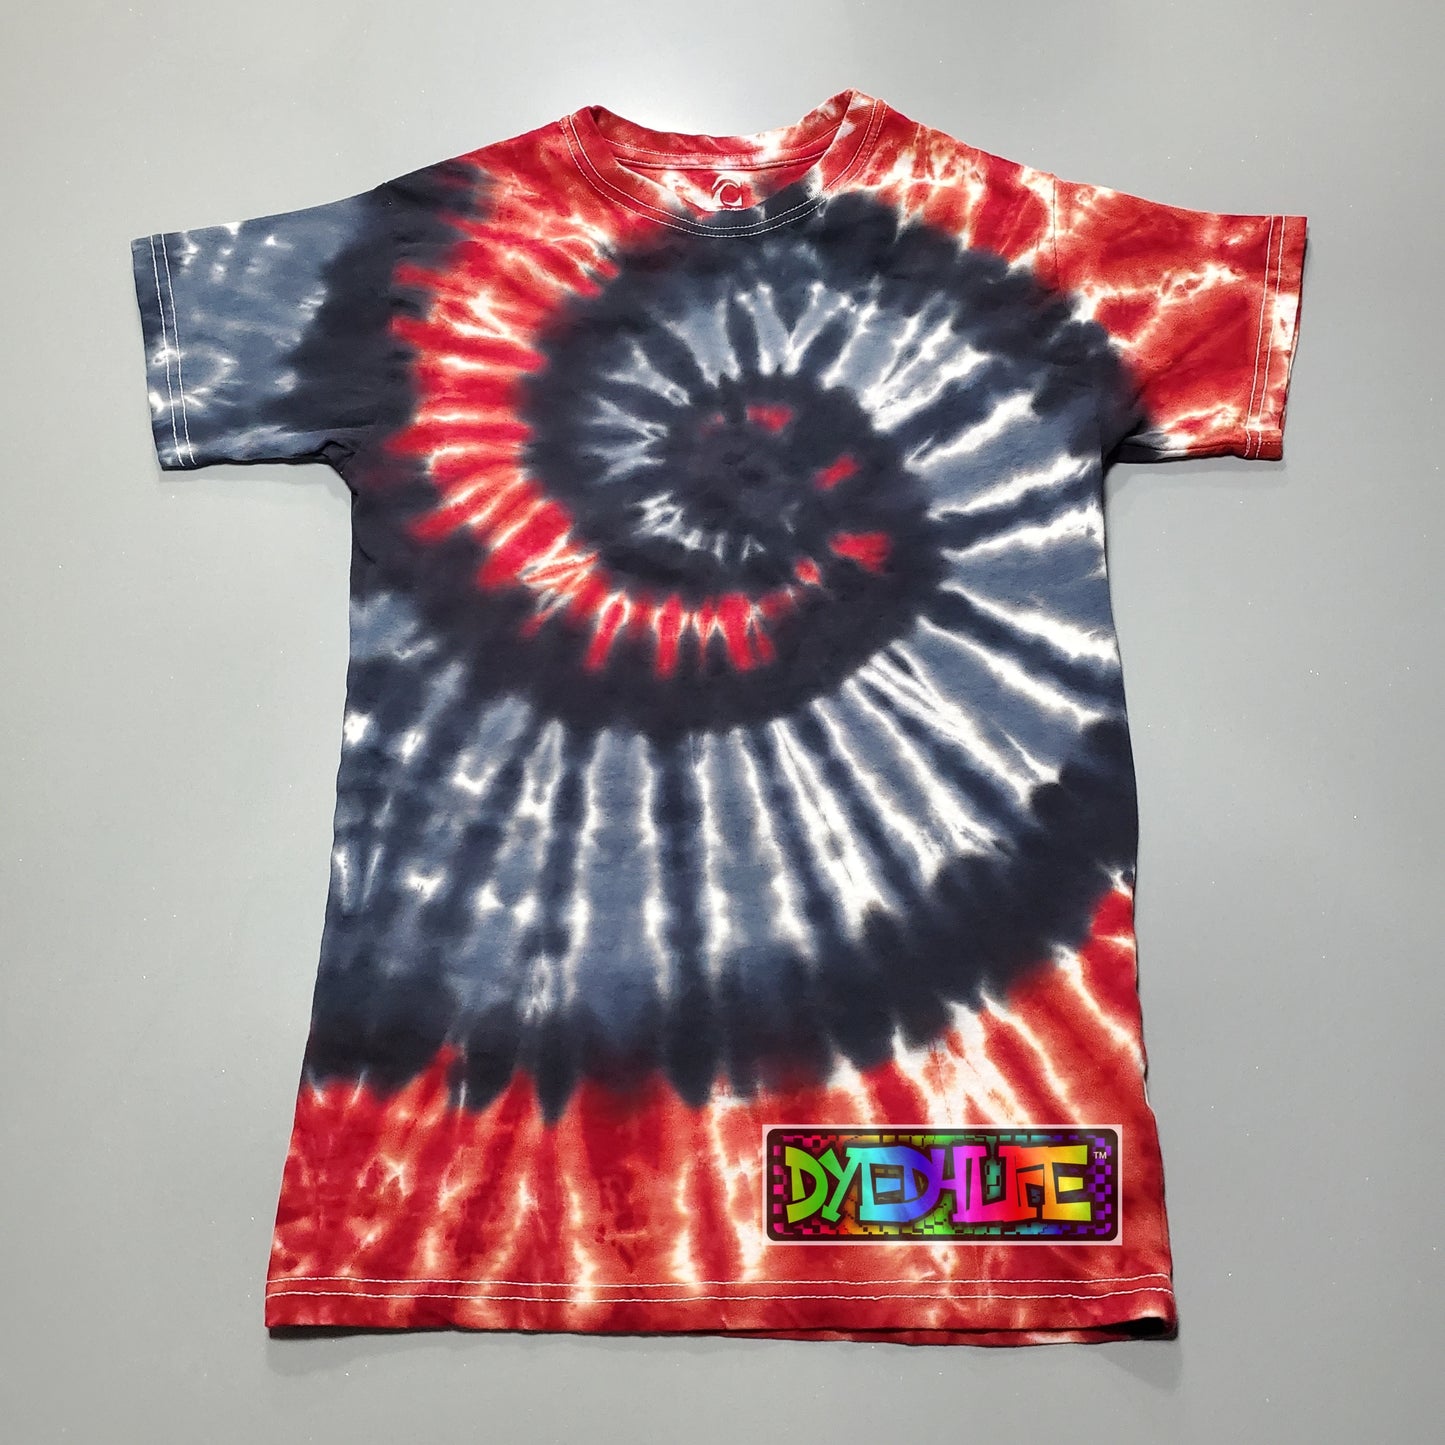 2 Tone Spiral Design Tie Dye T Shirt